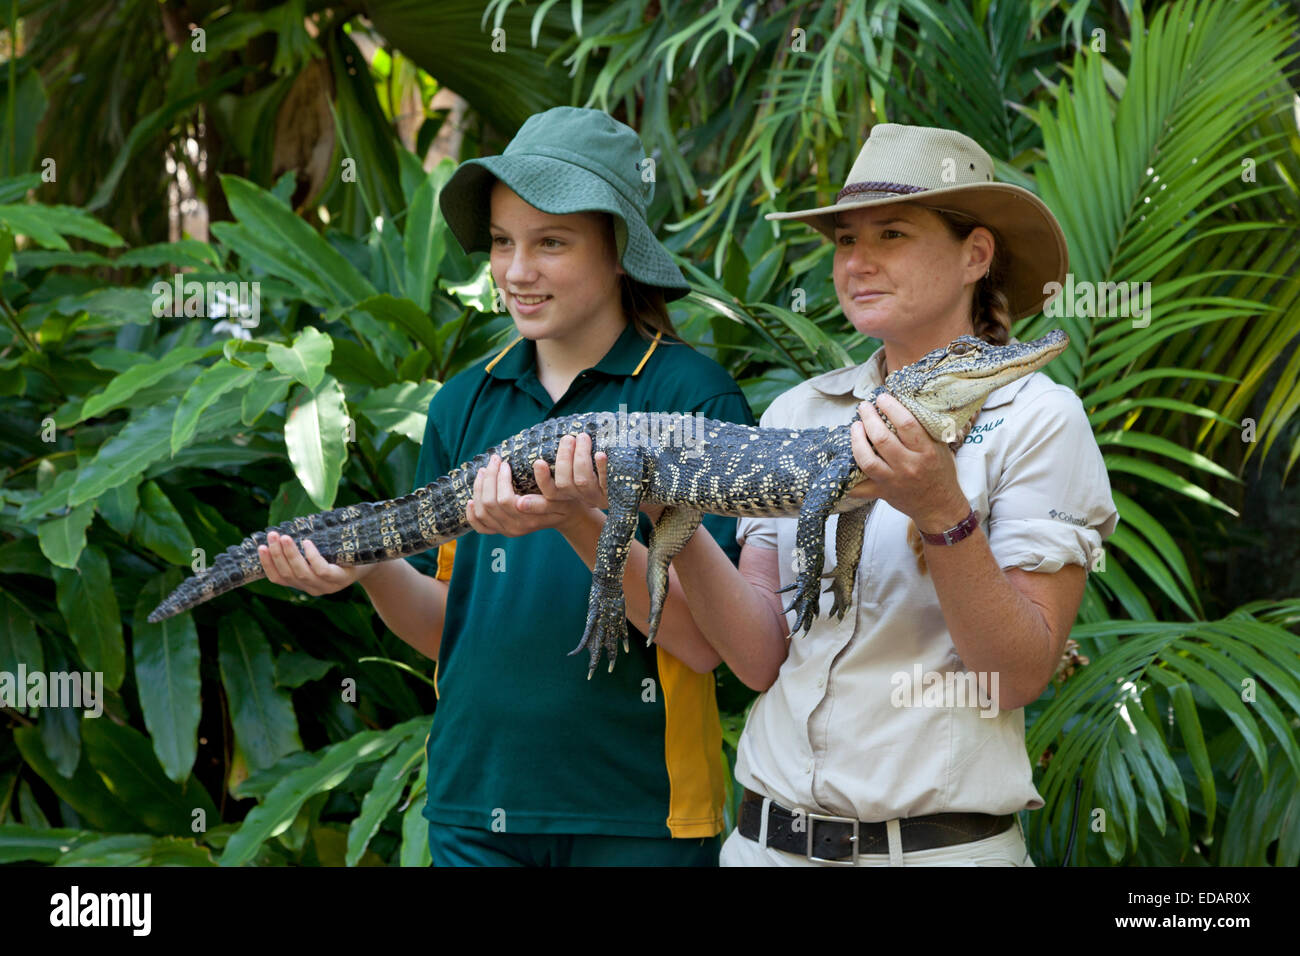 Zookeeper posing with a crocodile in the Australian Zoo, Australia Stock Photo